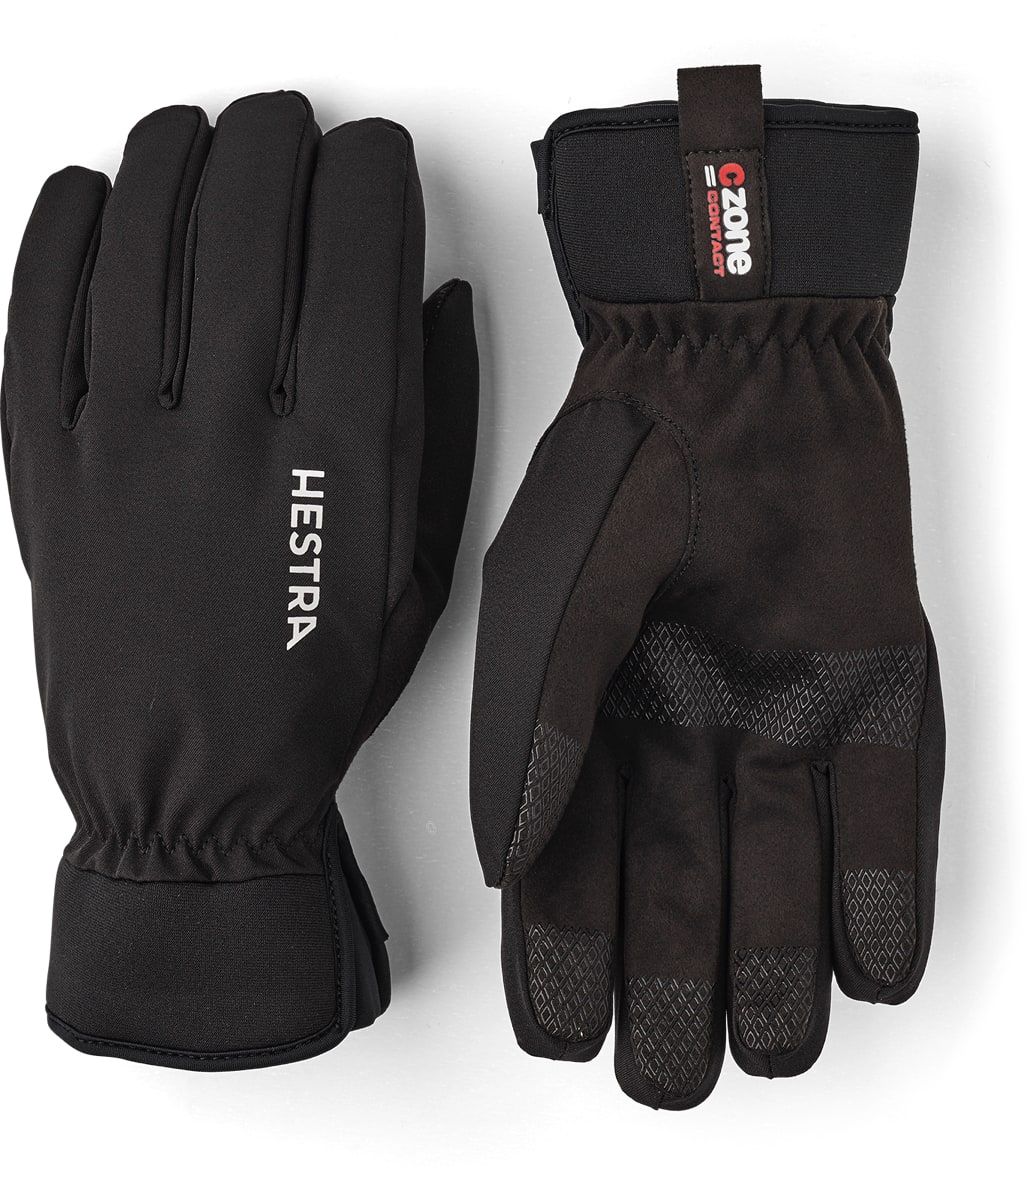 Hestra Czone Contact Glove -5 Finger Svart